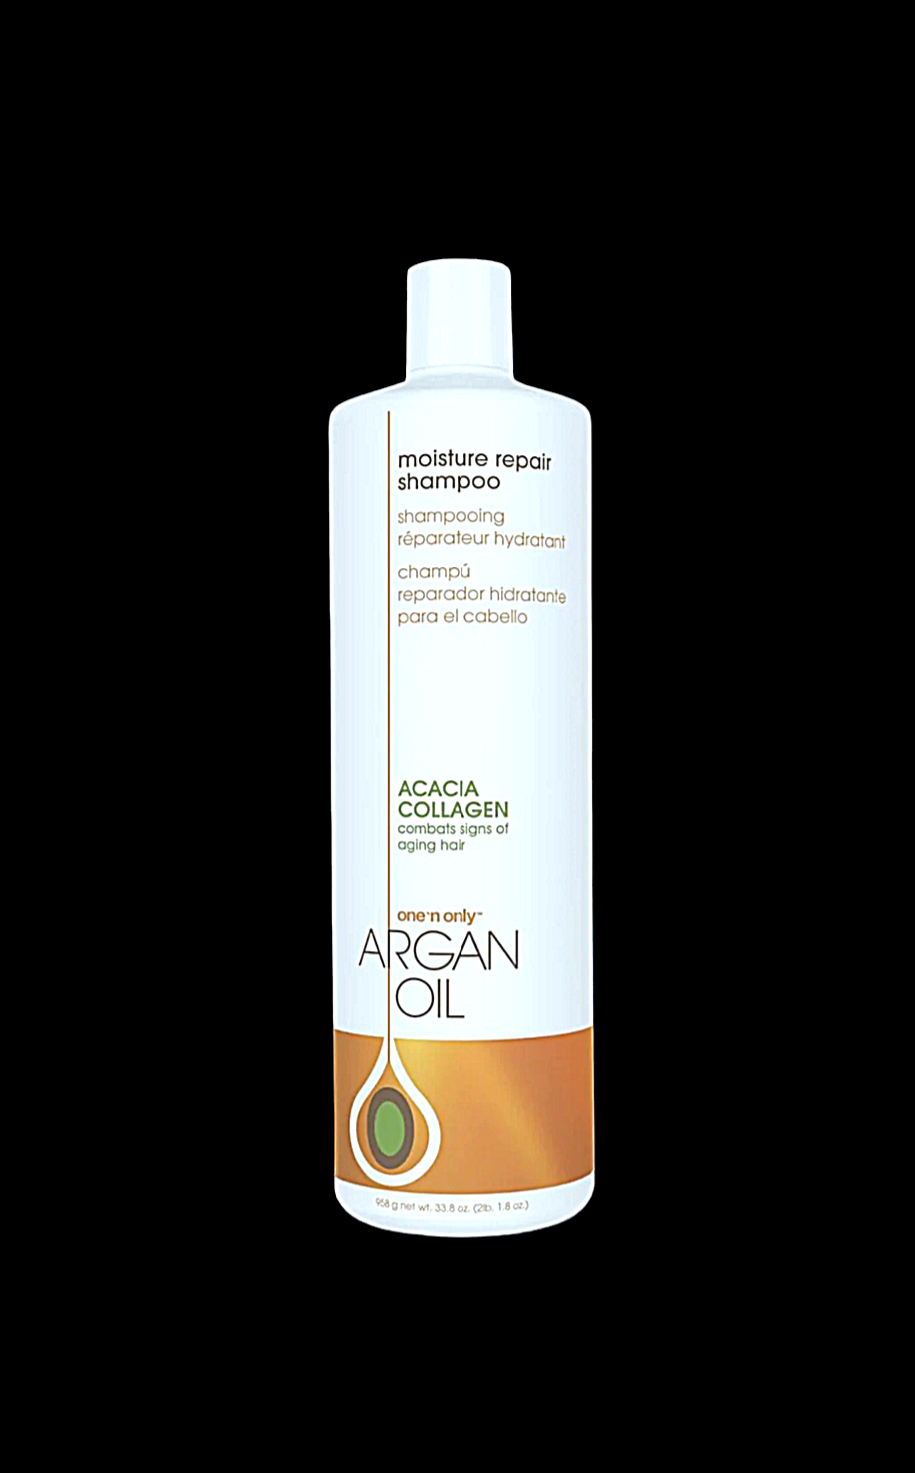 Argan Oil moisture shampoo